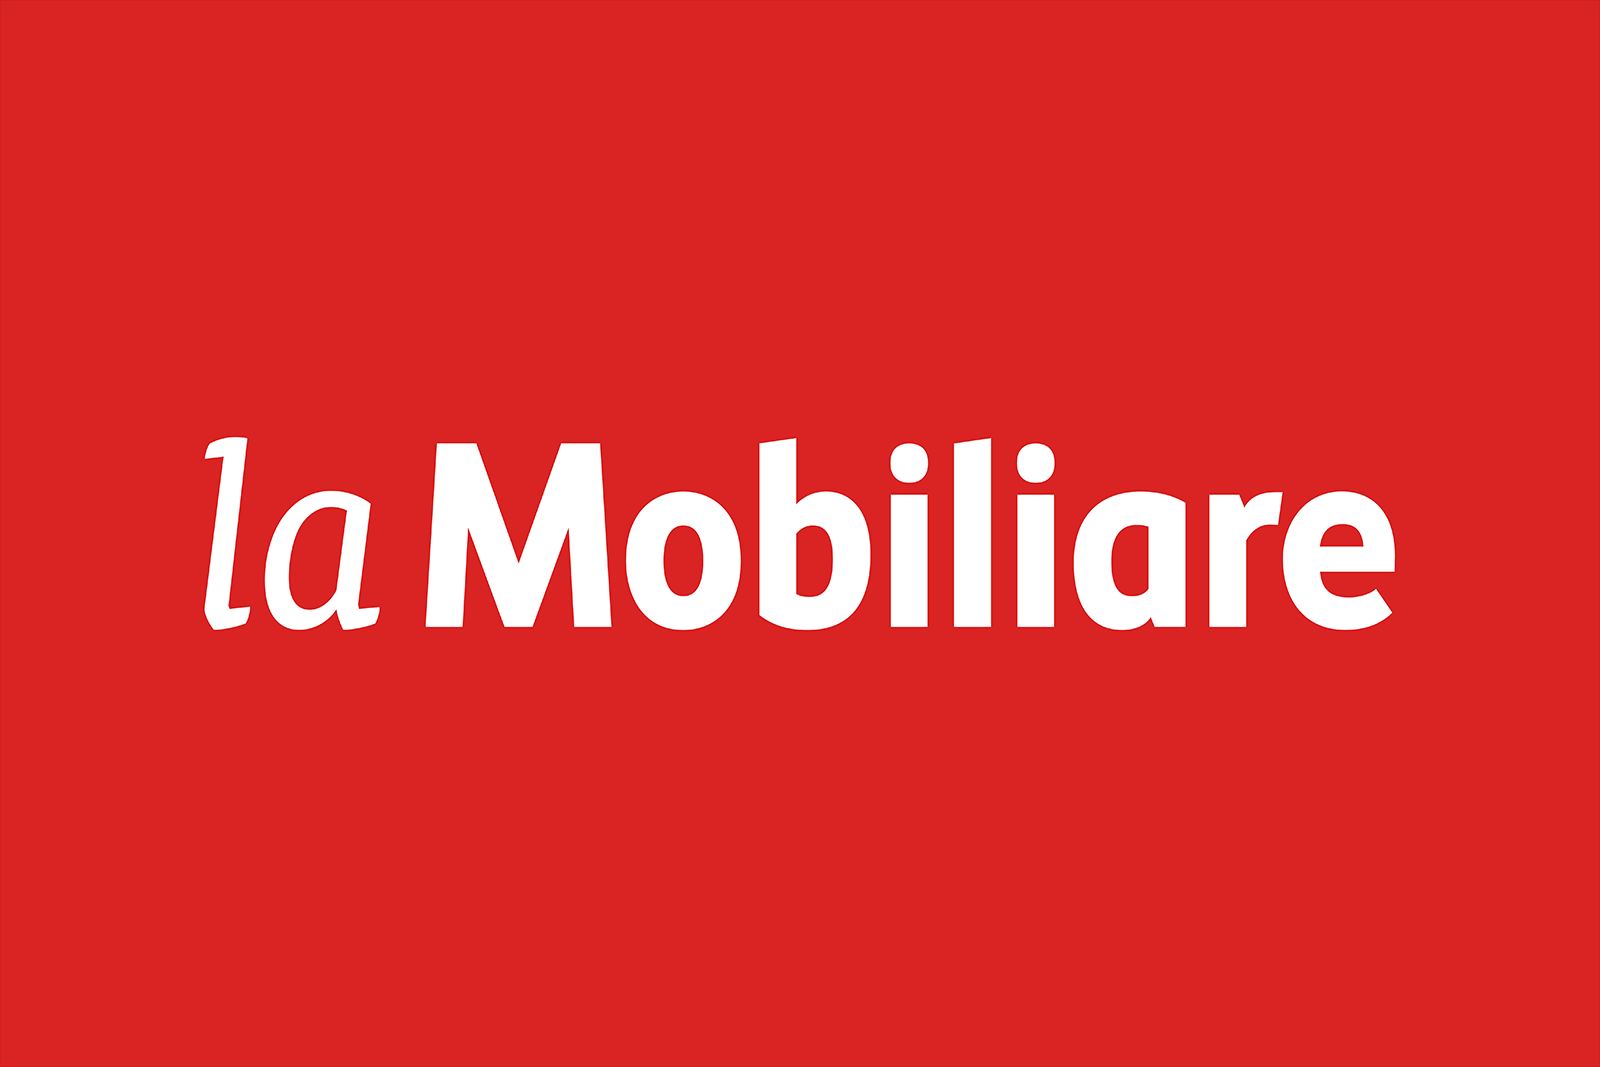 La Mobiliare logo